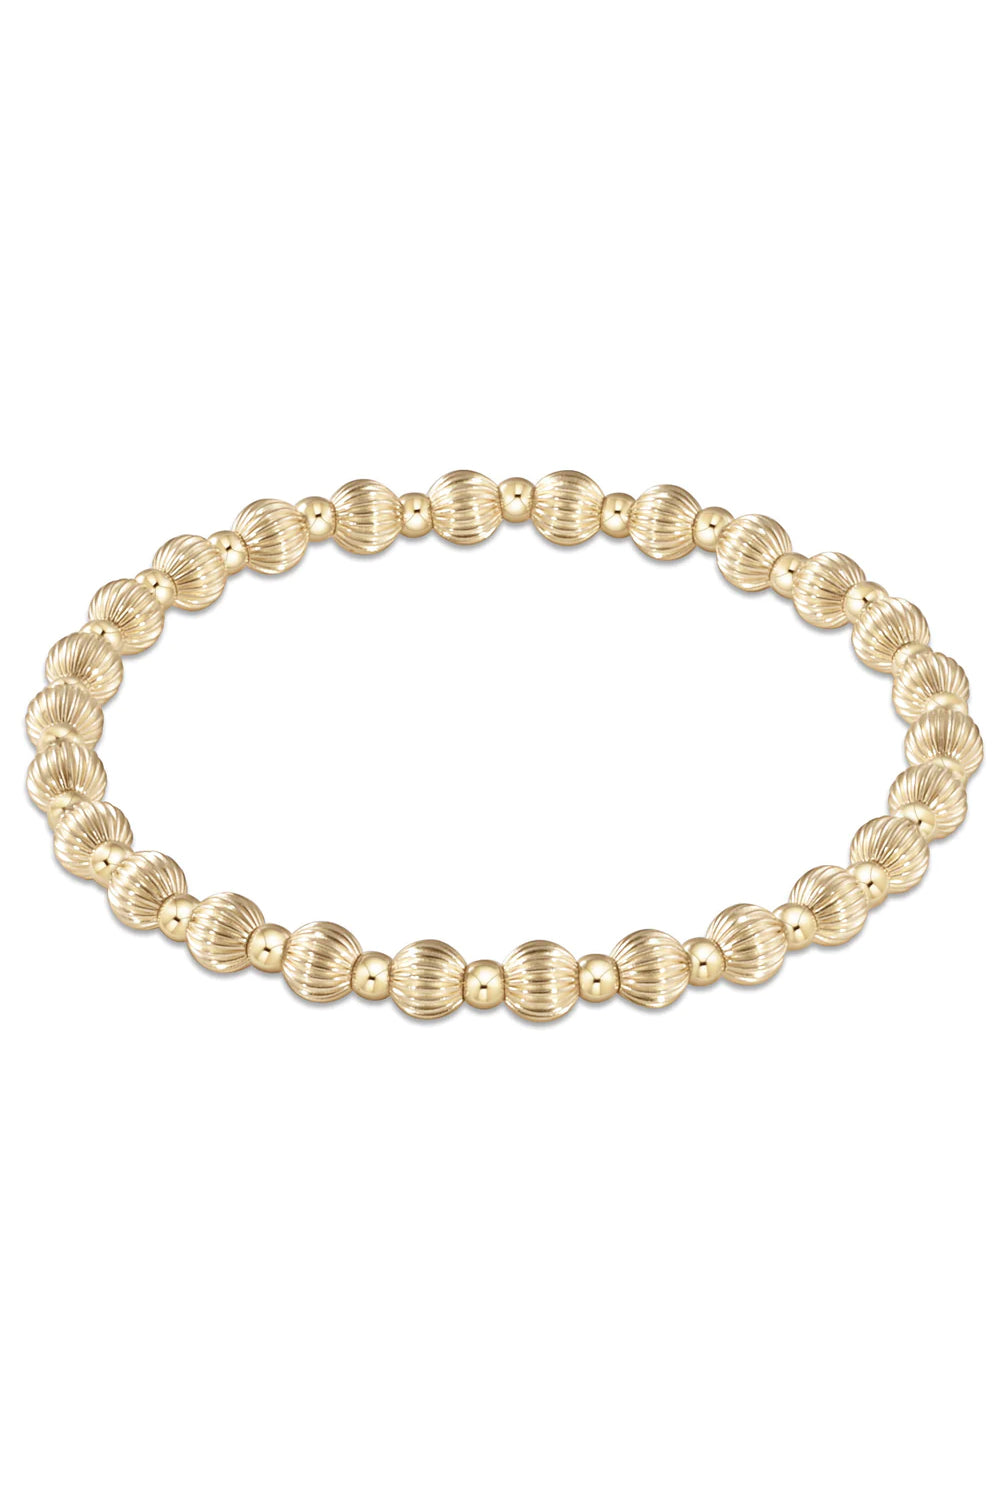 enewton: Dignity Grateful Pattern 5mm Bead Bracelet - Gold | Makk Fashions